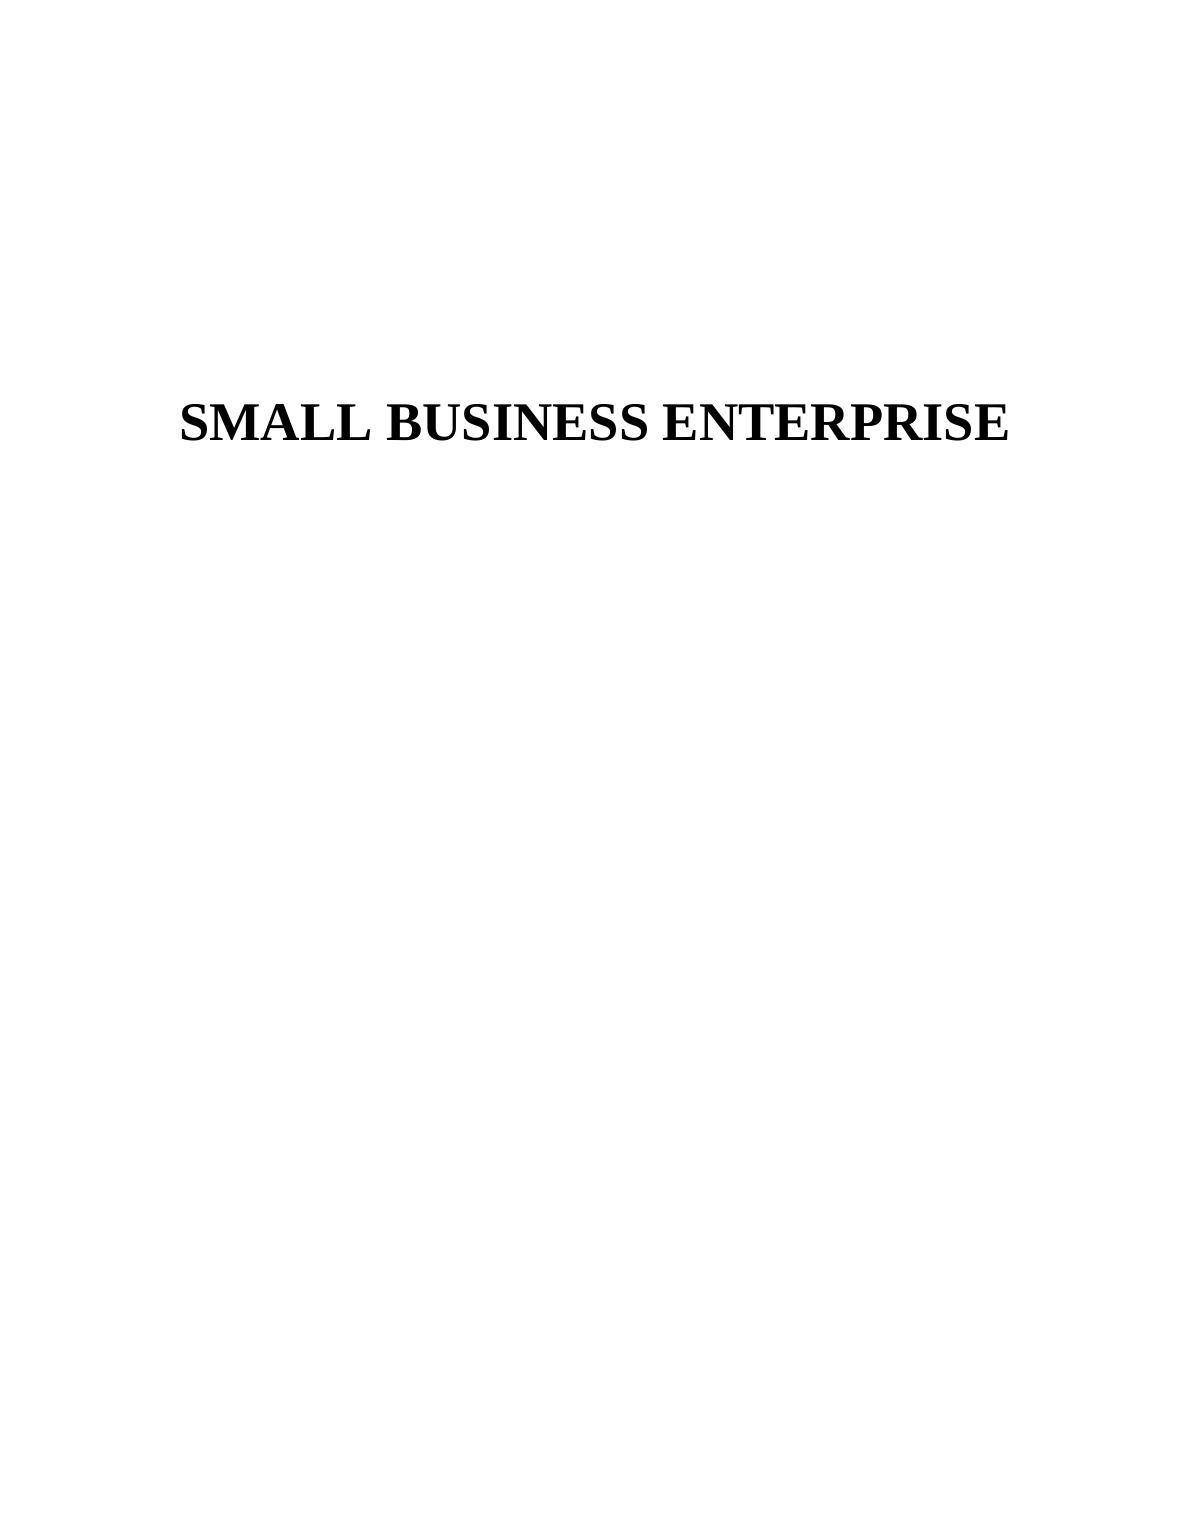 Small Business Enterprise Assignment - F&W café_1